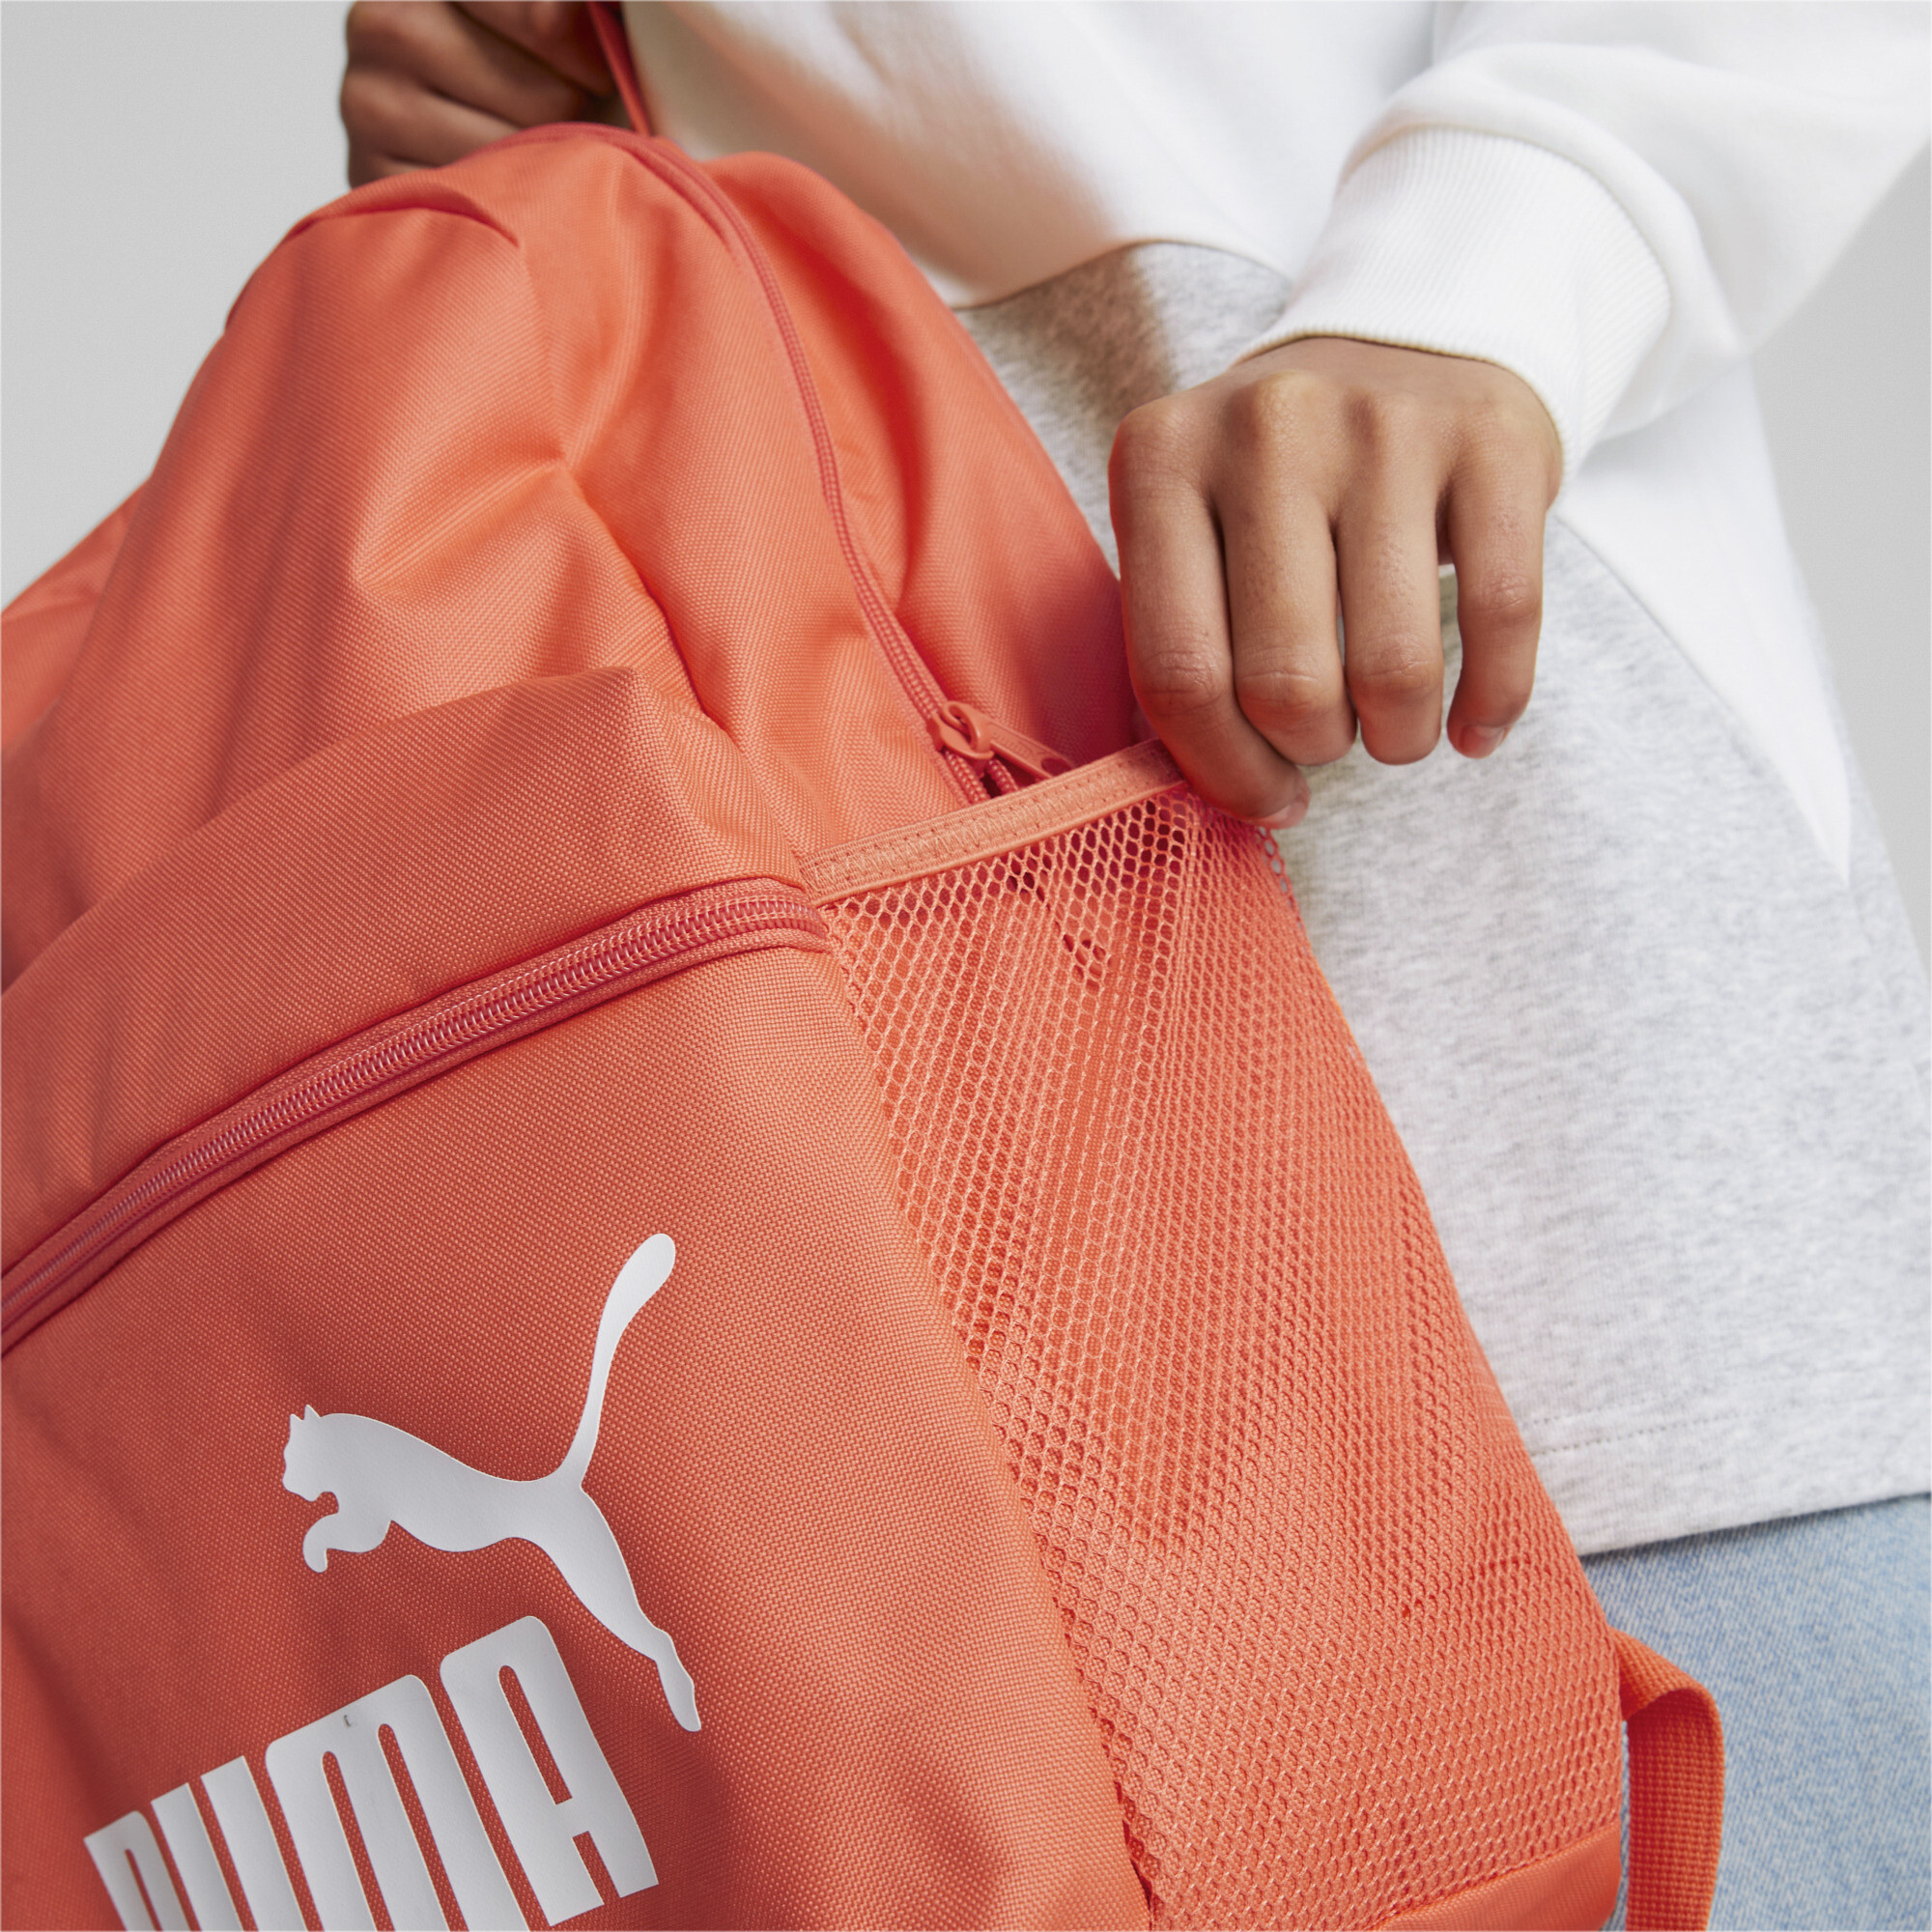 Puma Phase Backpack, Orange, Accessories